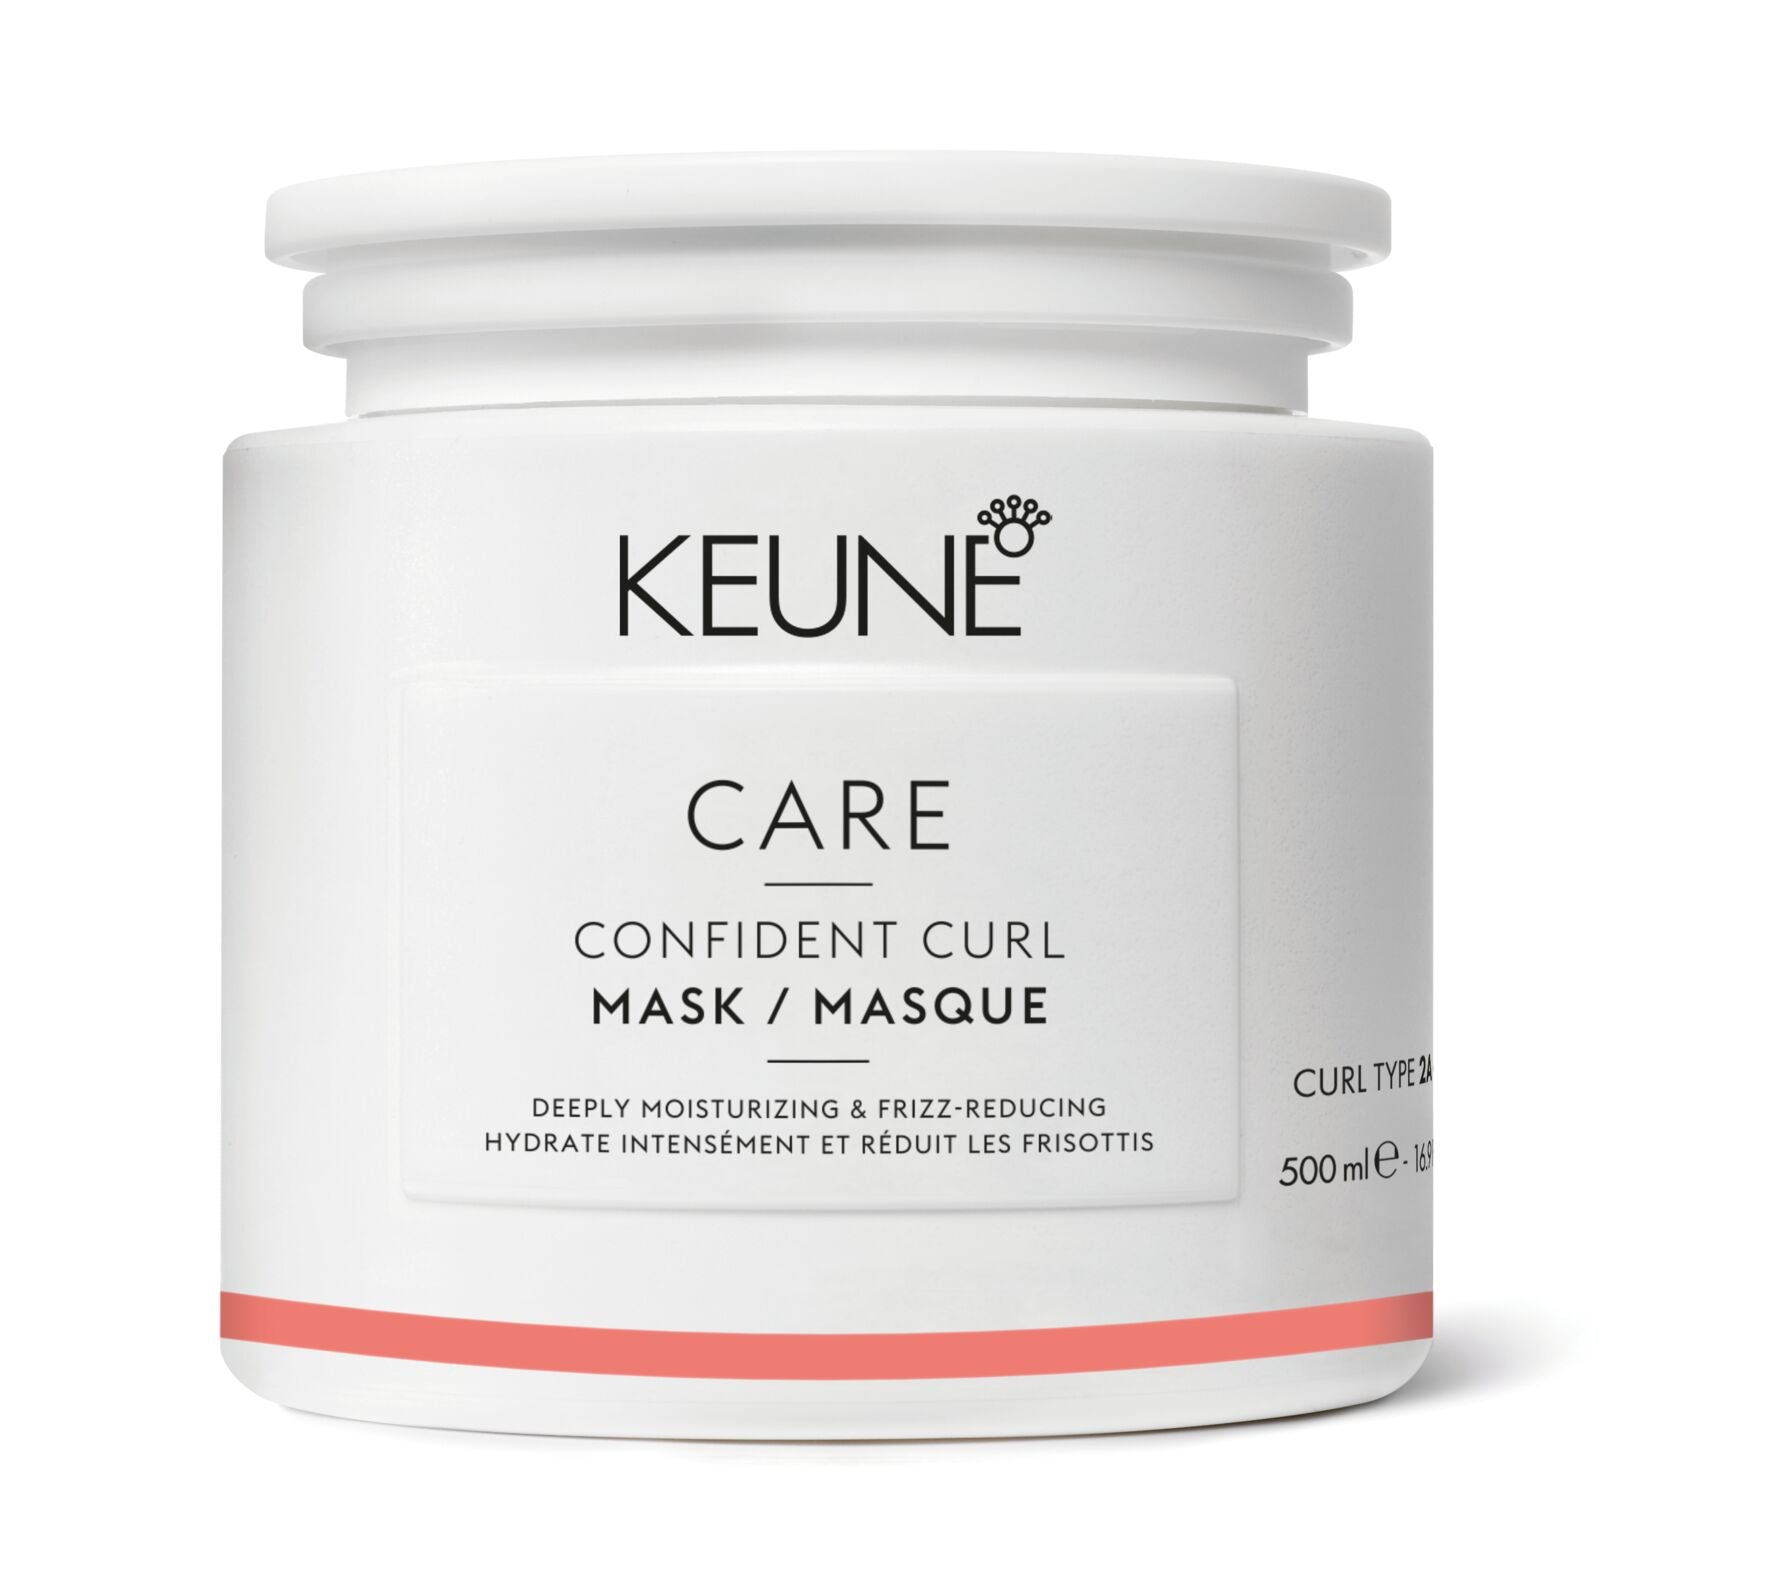 Keune Care Confident Curl Mask 500ml CFH Care For Hair